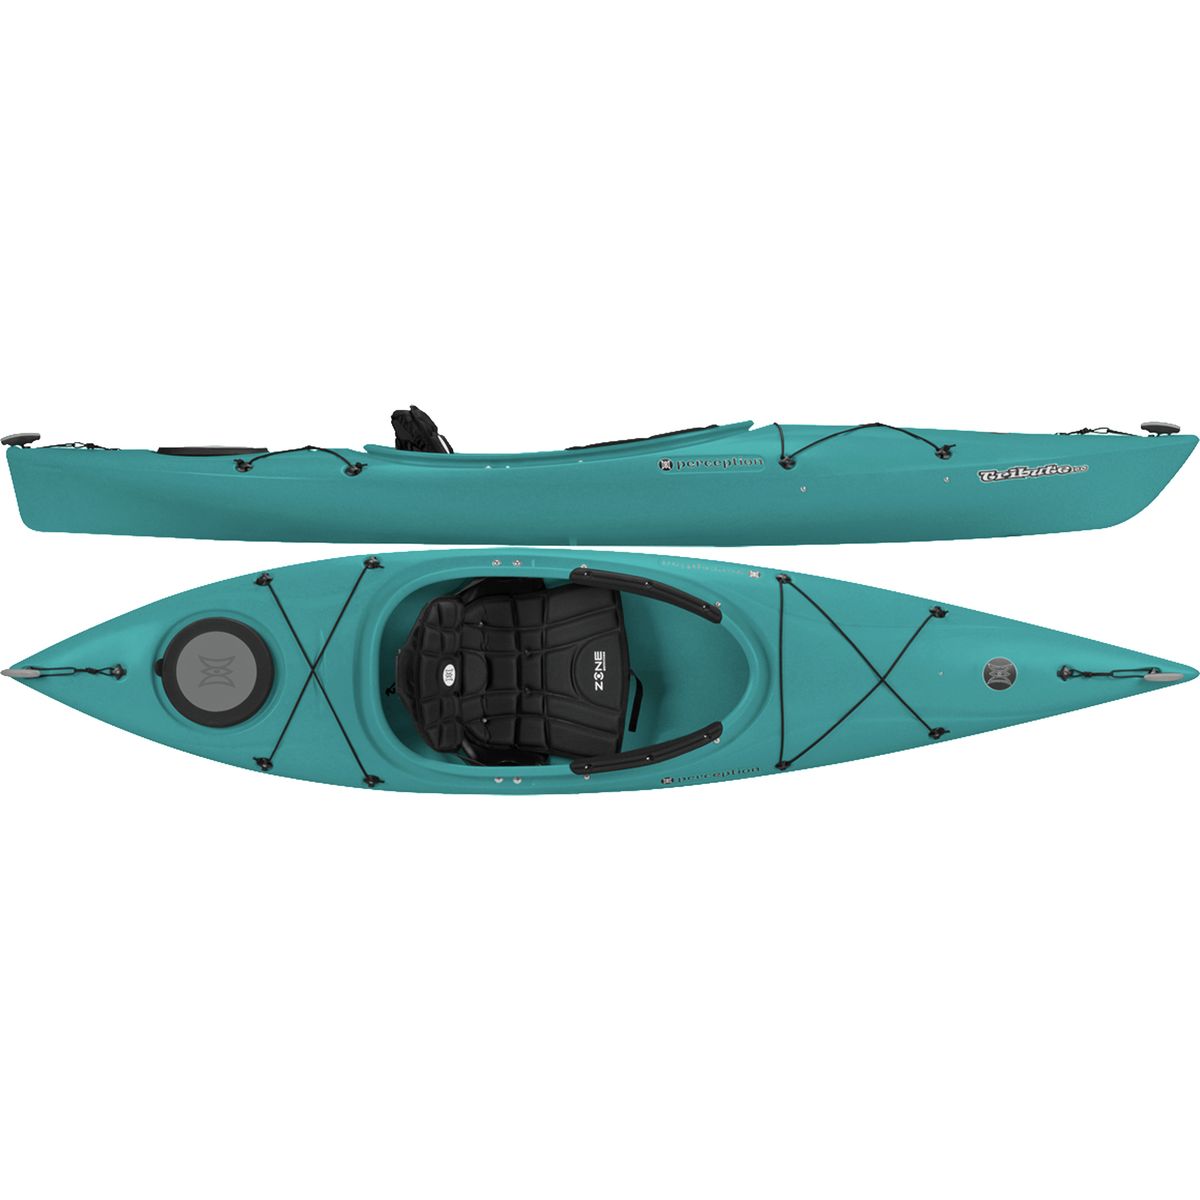 Turquoise Perception Tribute 10.0 Kayak